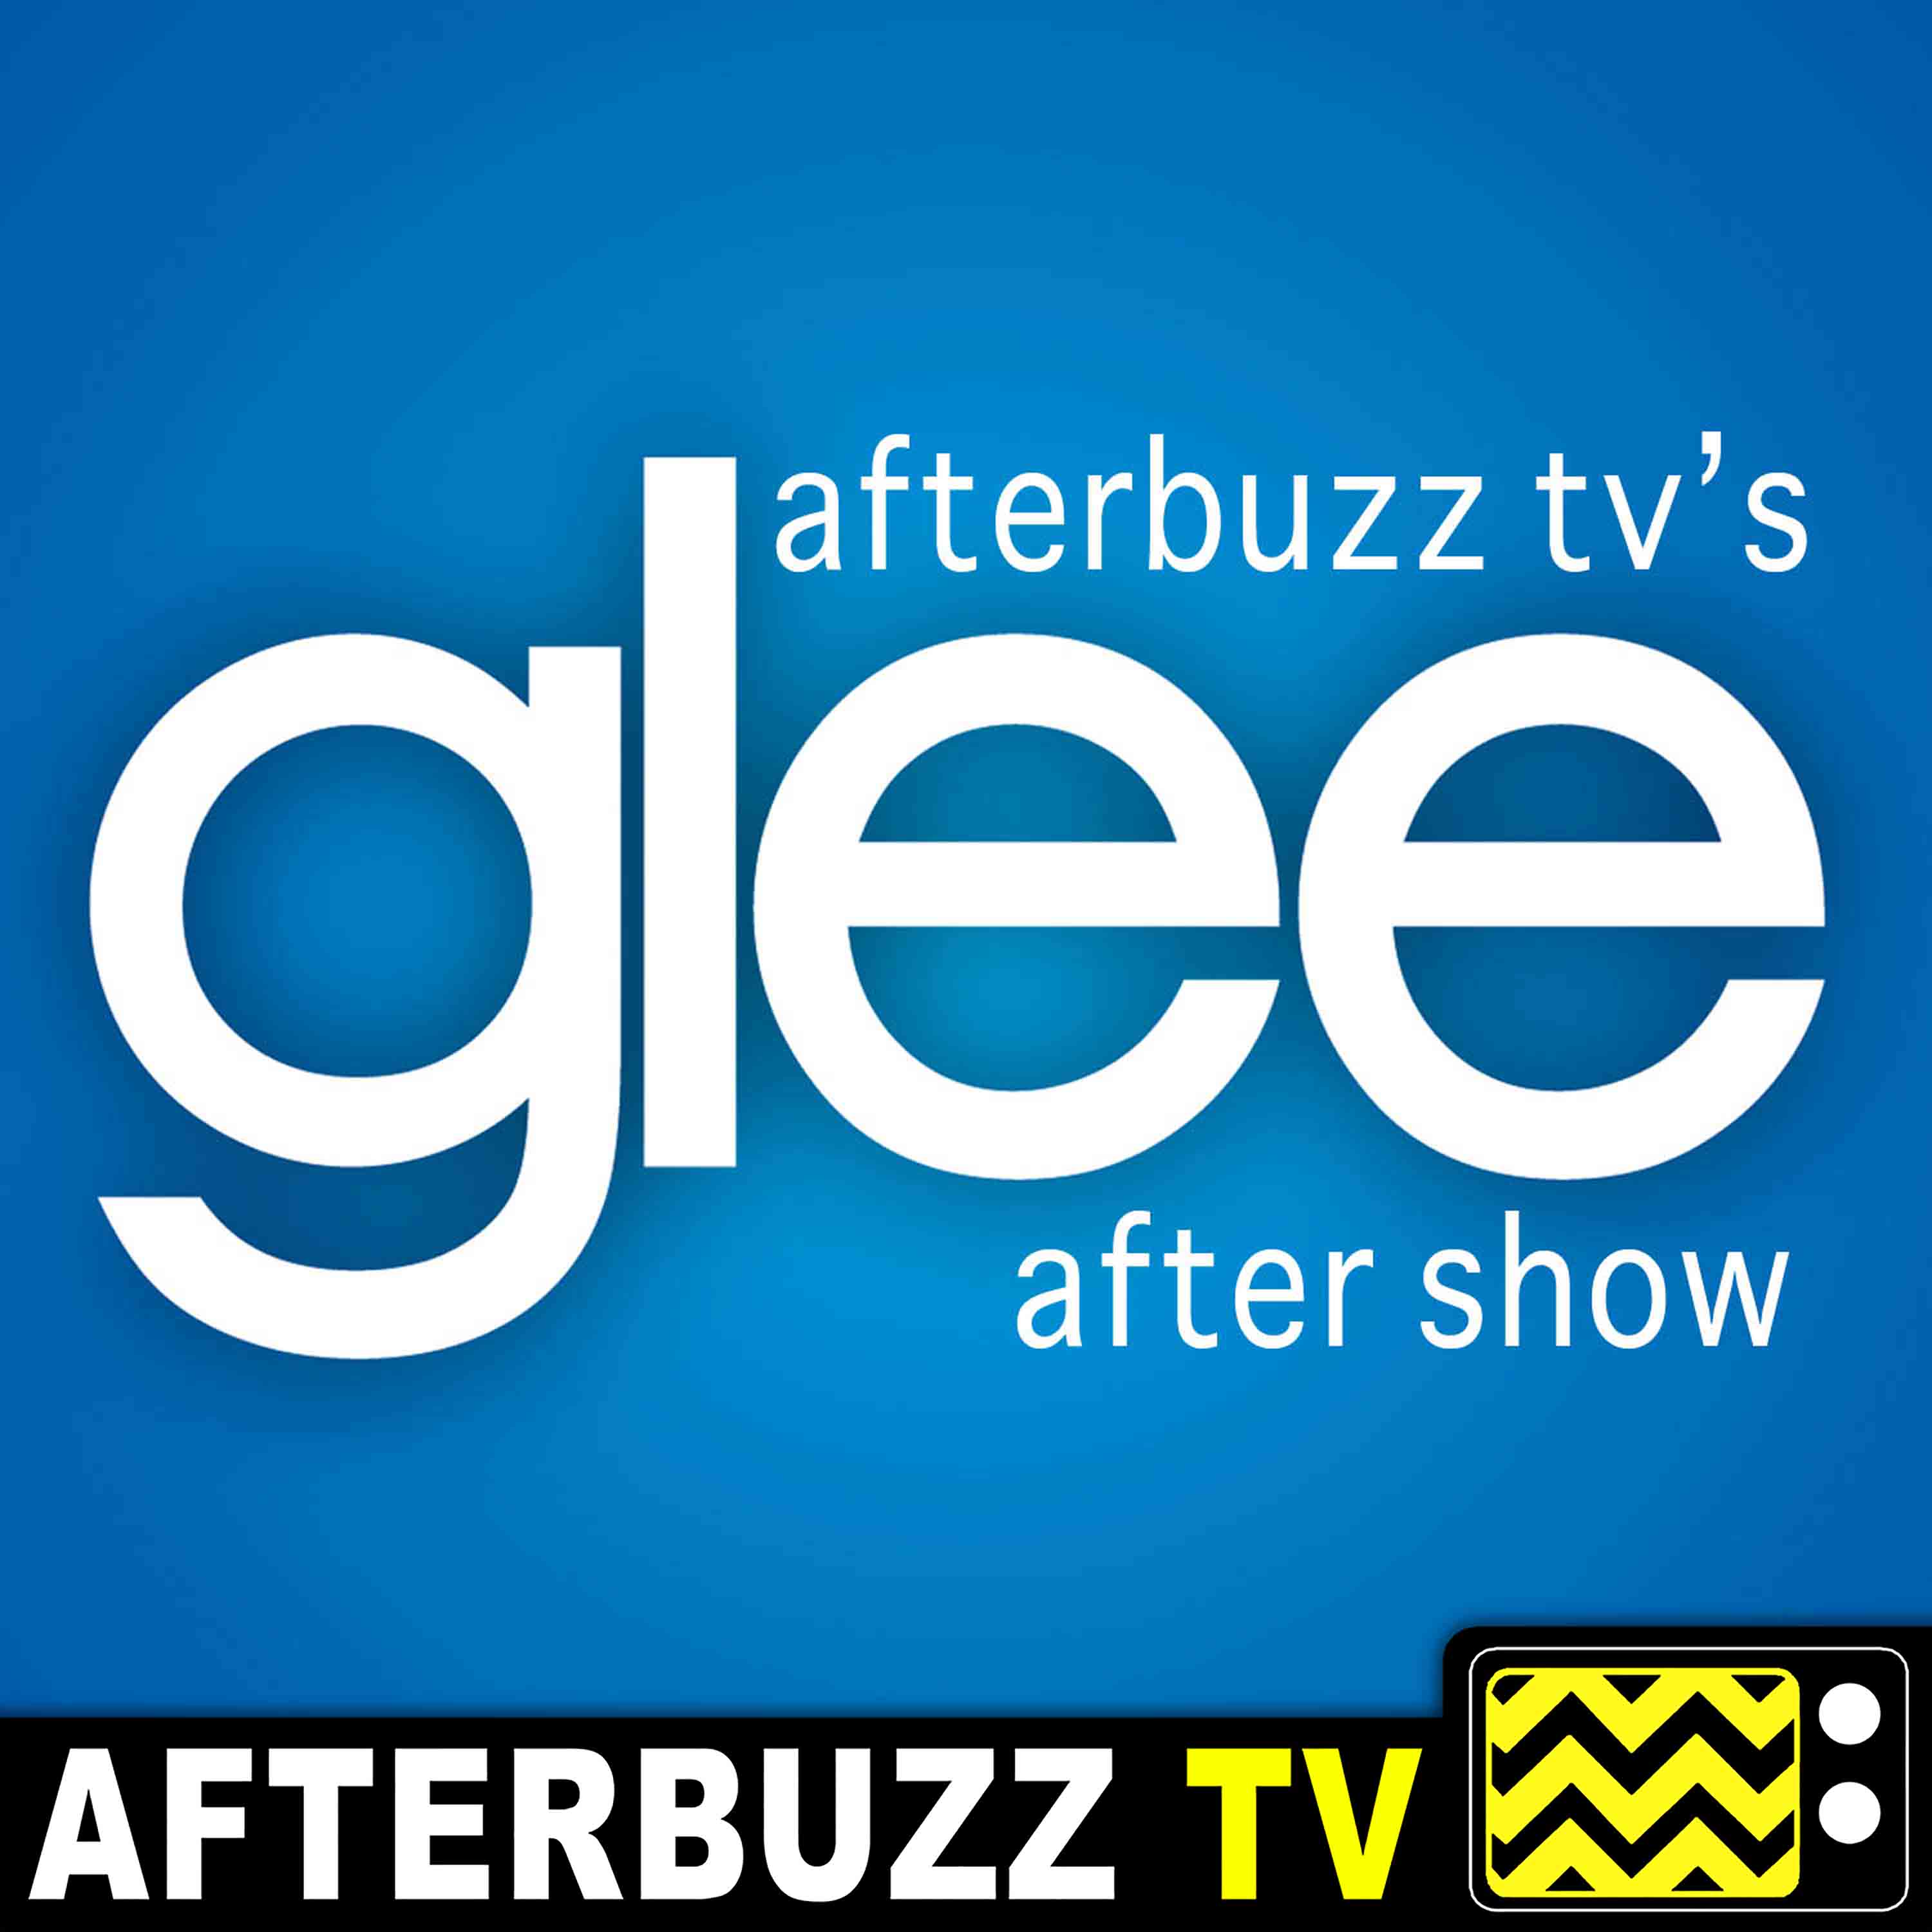 Glee S:6 | A Wedding E:8 | AfterBuzz TV AfterShow